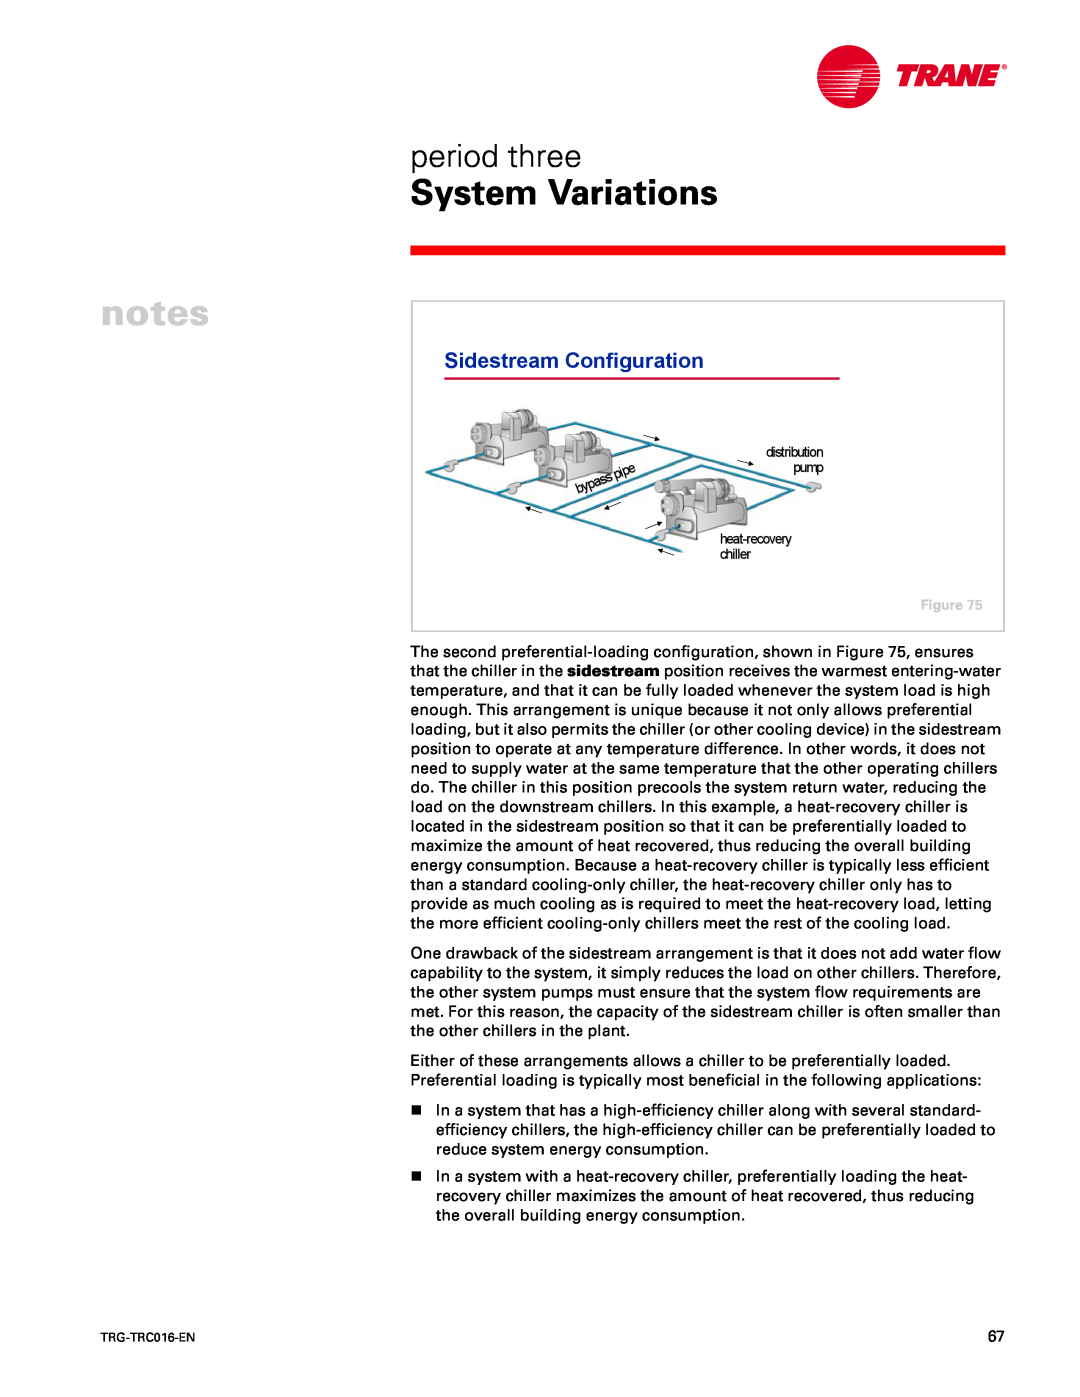 Trane TRG-TRC016-EN manual Sidestream Configuration, notes, System Variations, period three 